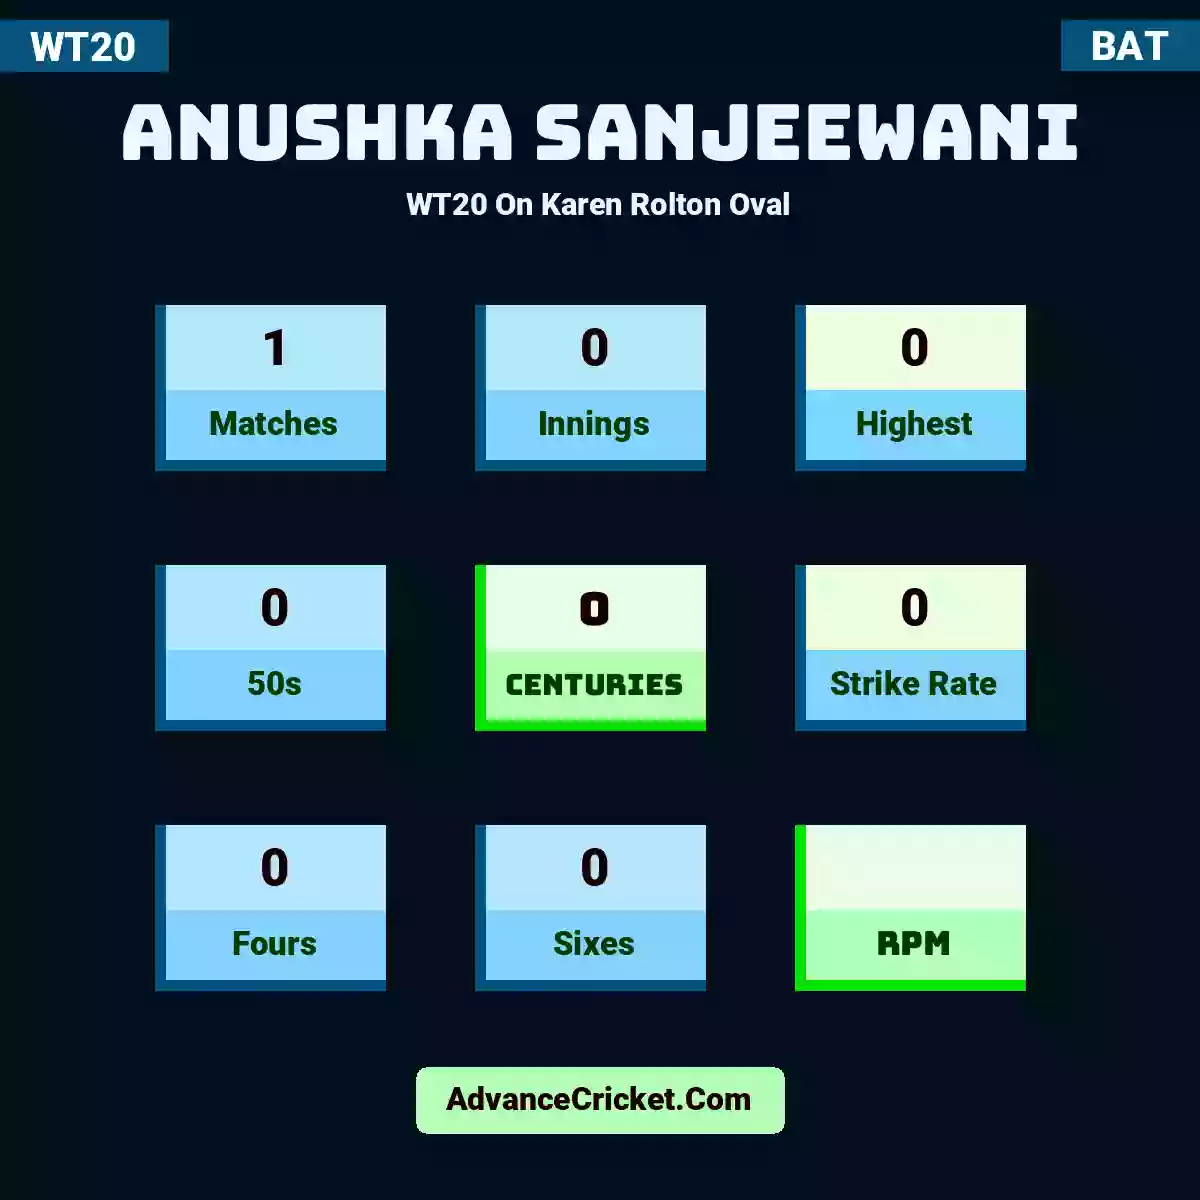 Anushka Sanjeewani WT20  On Karen Rolton Oval, Anushka Sanjeewani played 1 matches, scored 0 runs as highest, 0 half-centuries, and 0 centuries, with a strike rate of 0. A.Sanjeewani hit 0 fours and 0 sixes.